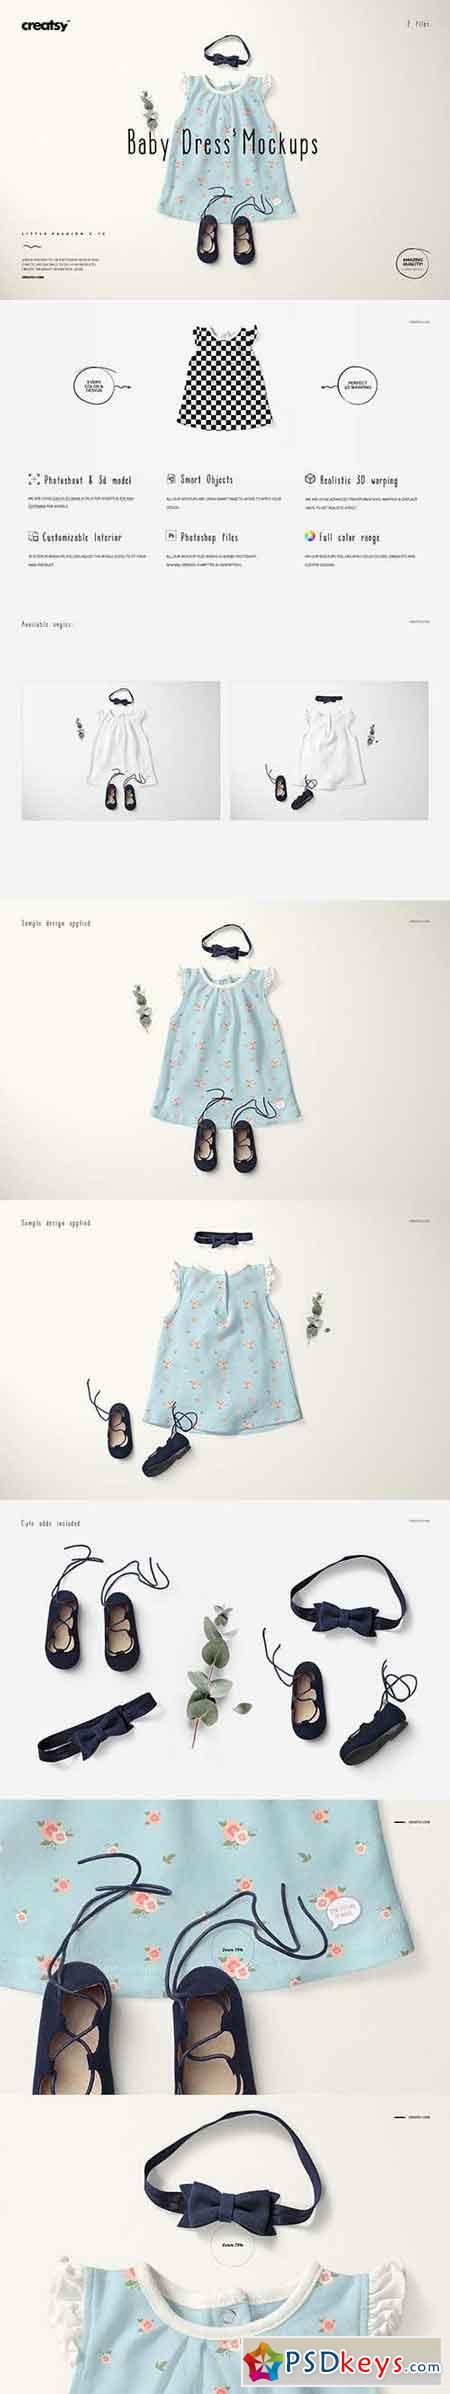 Baby Dress Mockup Set 5 2534318